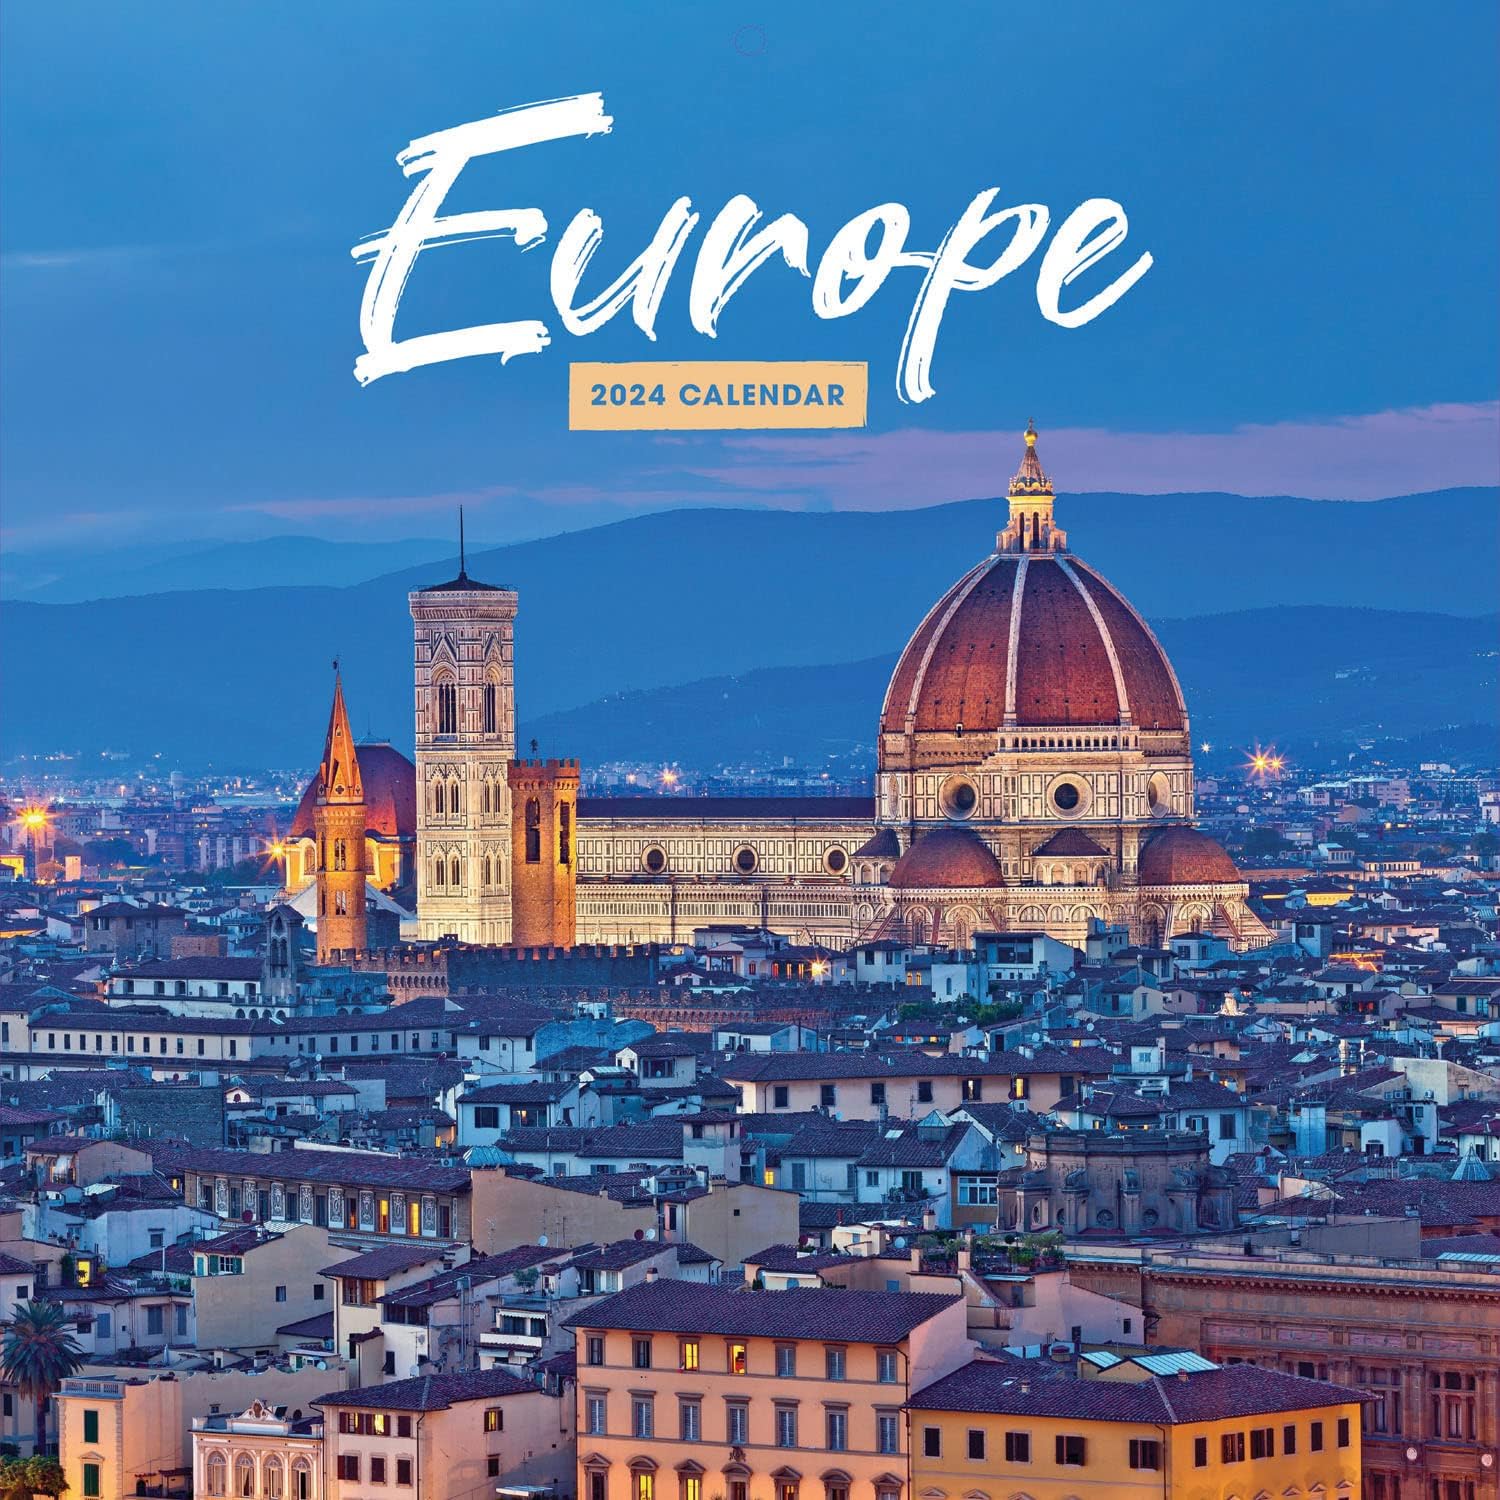 Calendar 2024 - Europe | Carousel